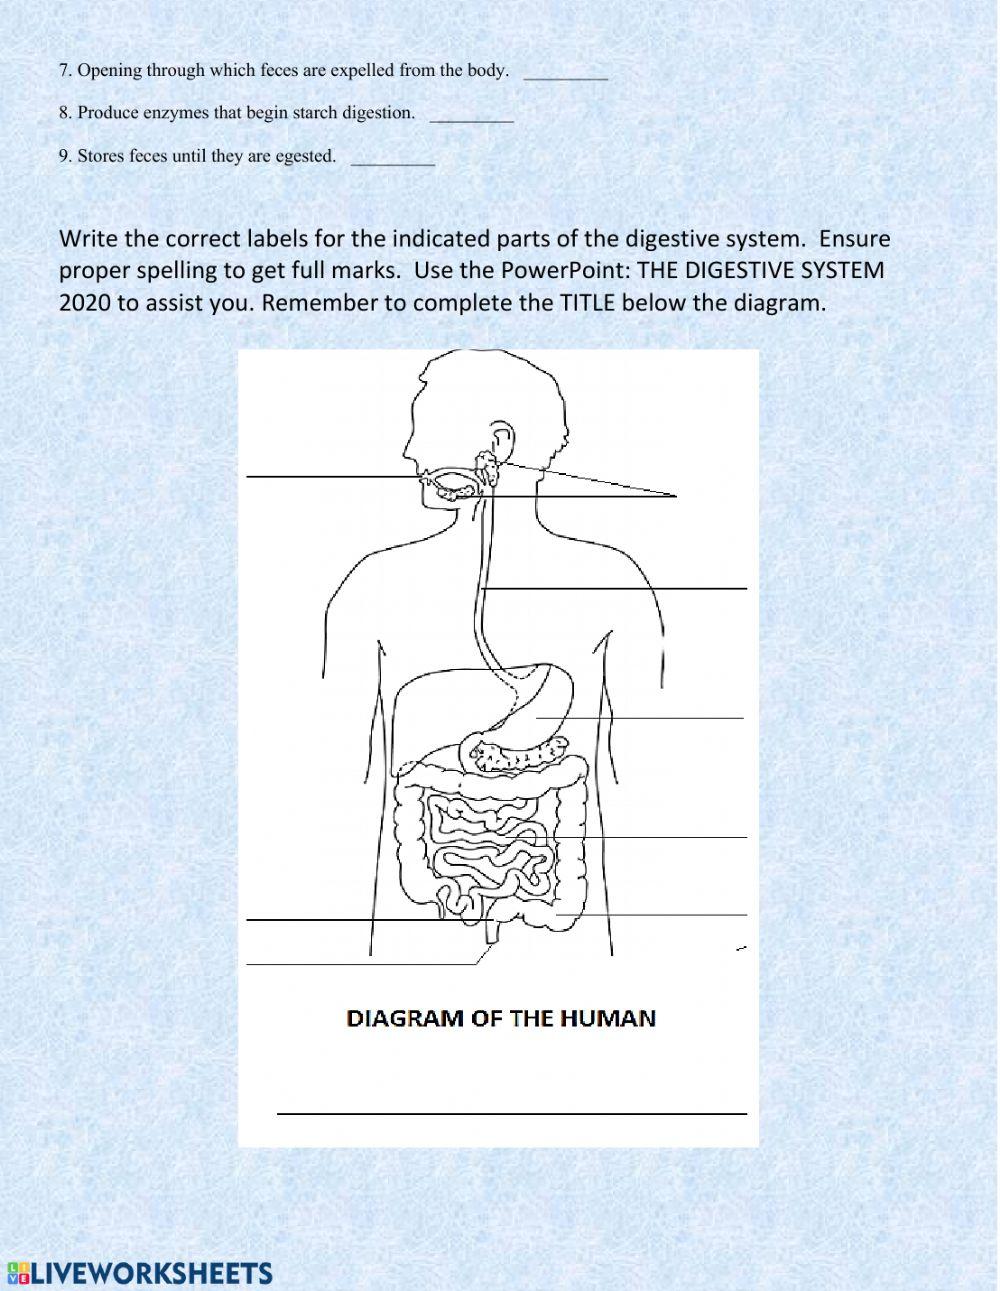 Digestive system 2